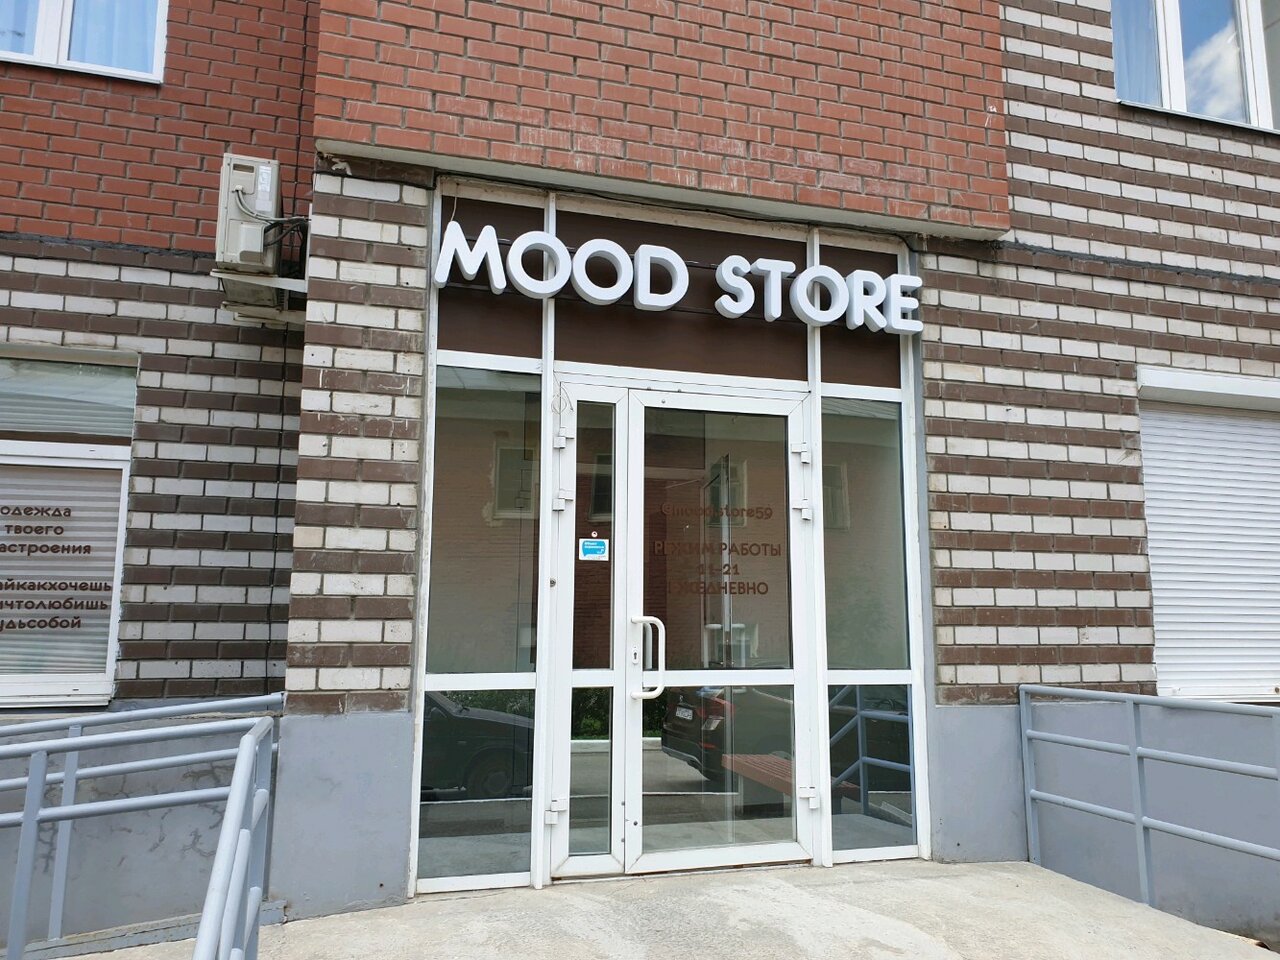 Mood Store Интернет Магазин